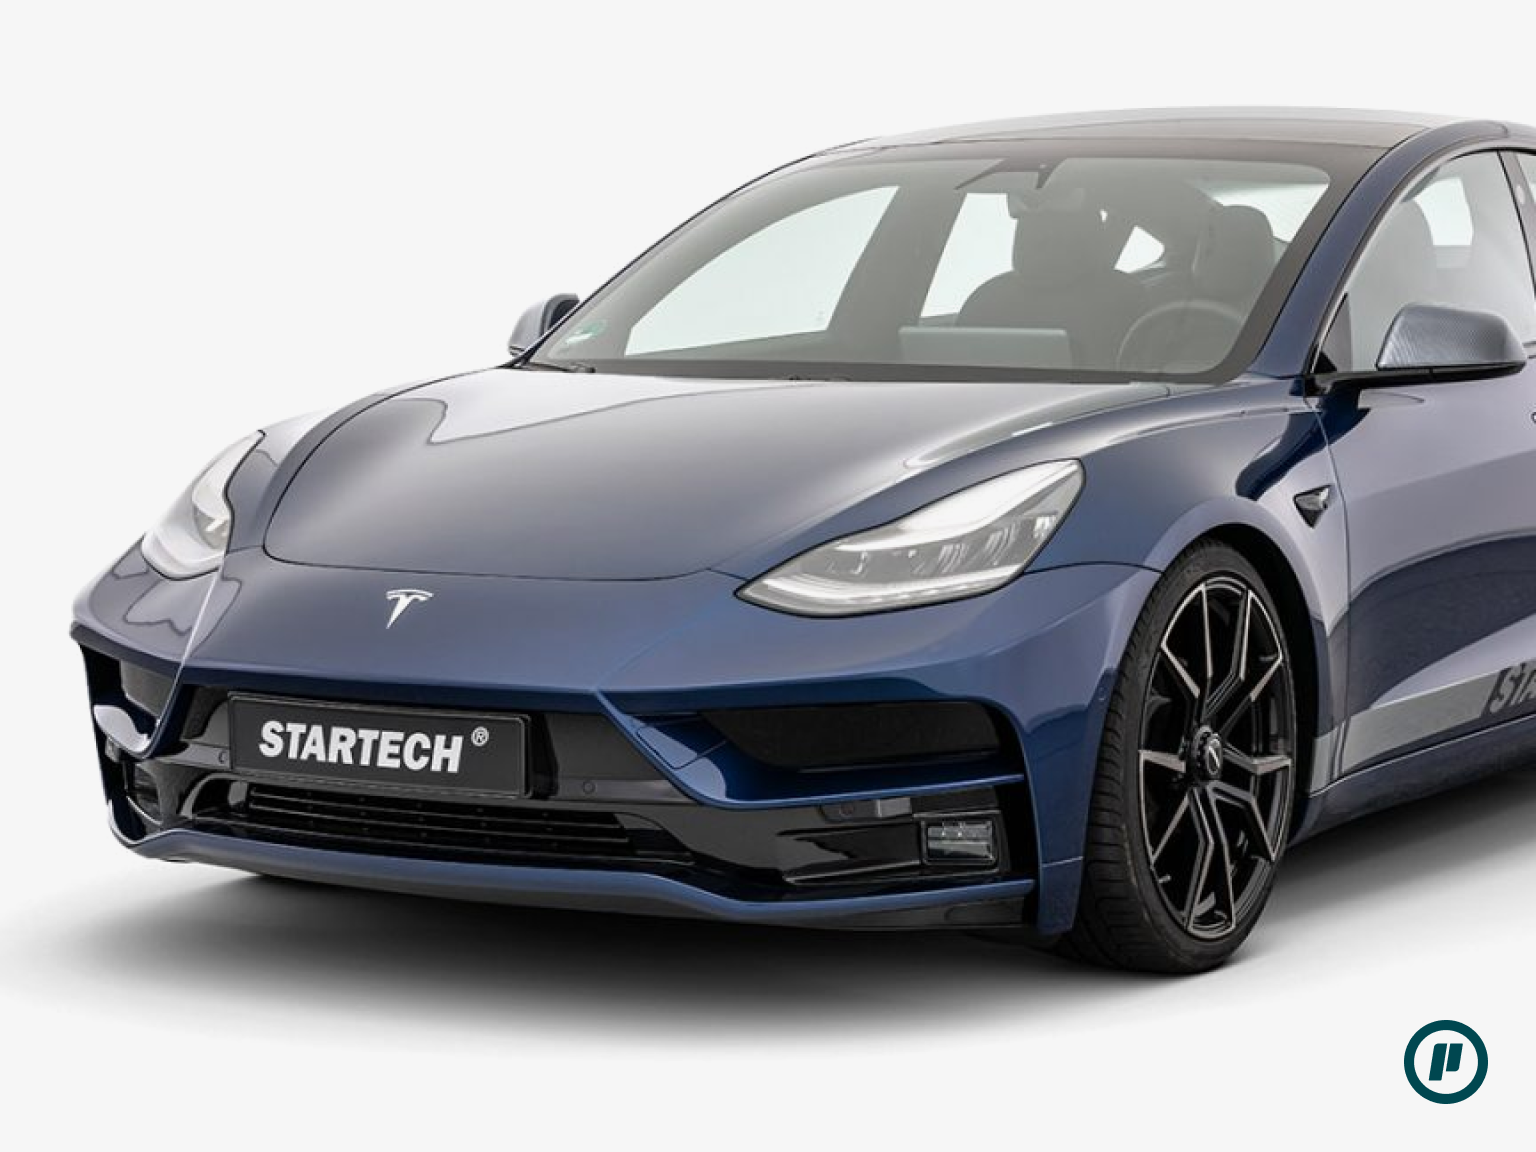 Startech Front Bumper for Tesla Model 3 (2017+)